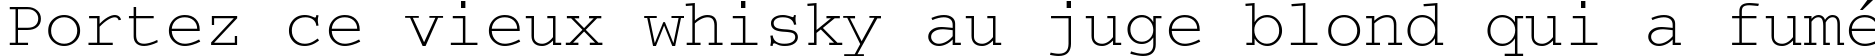 Пример написания шрифтом CourierTT текста на французском